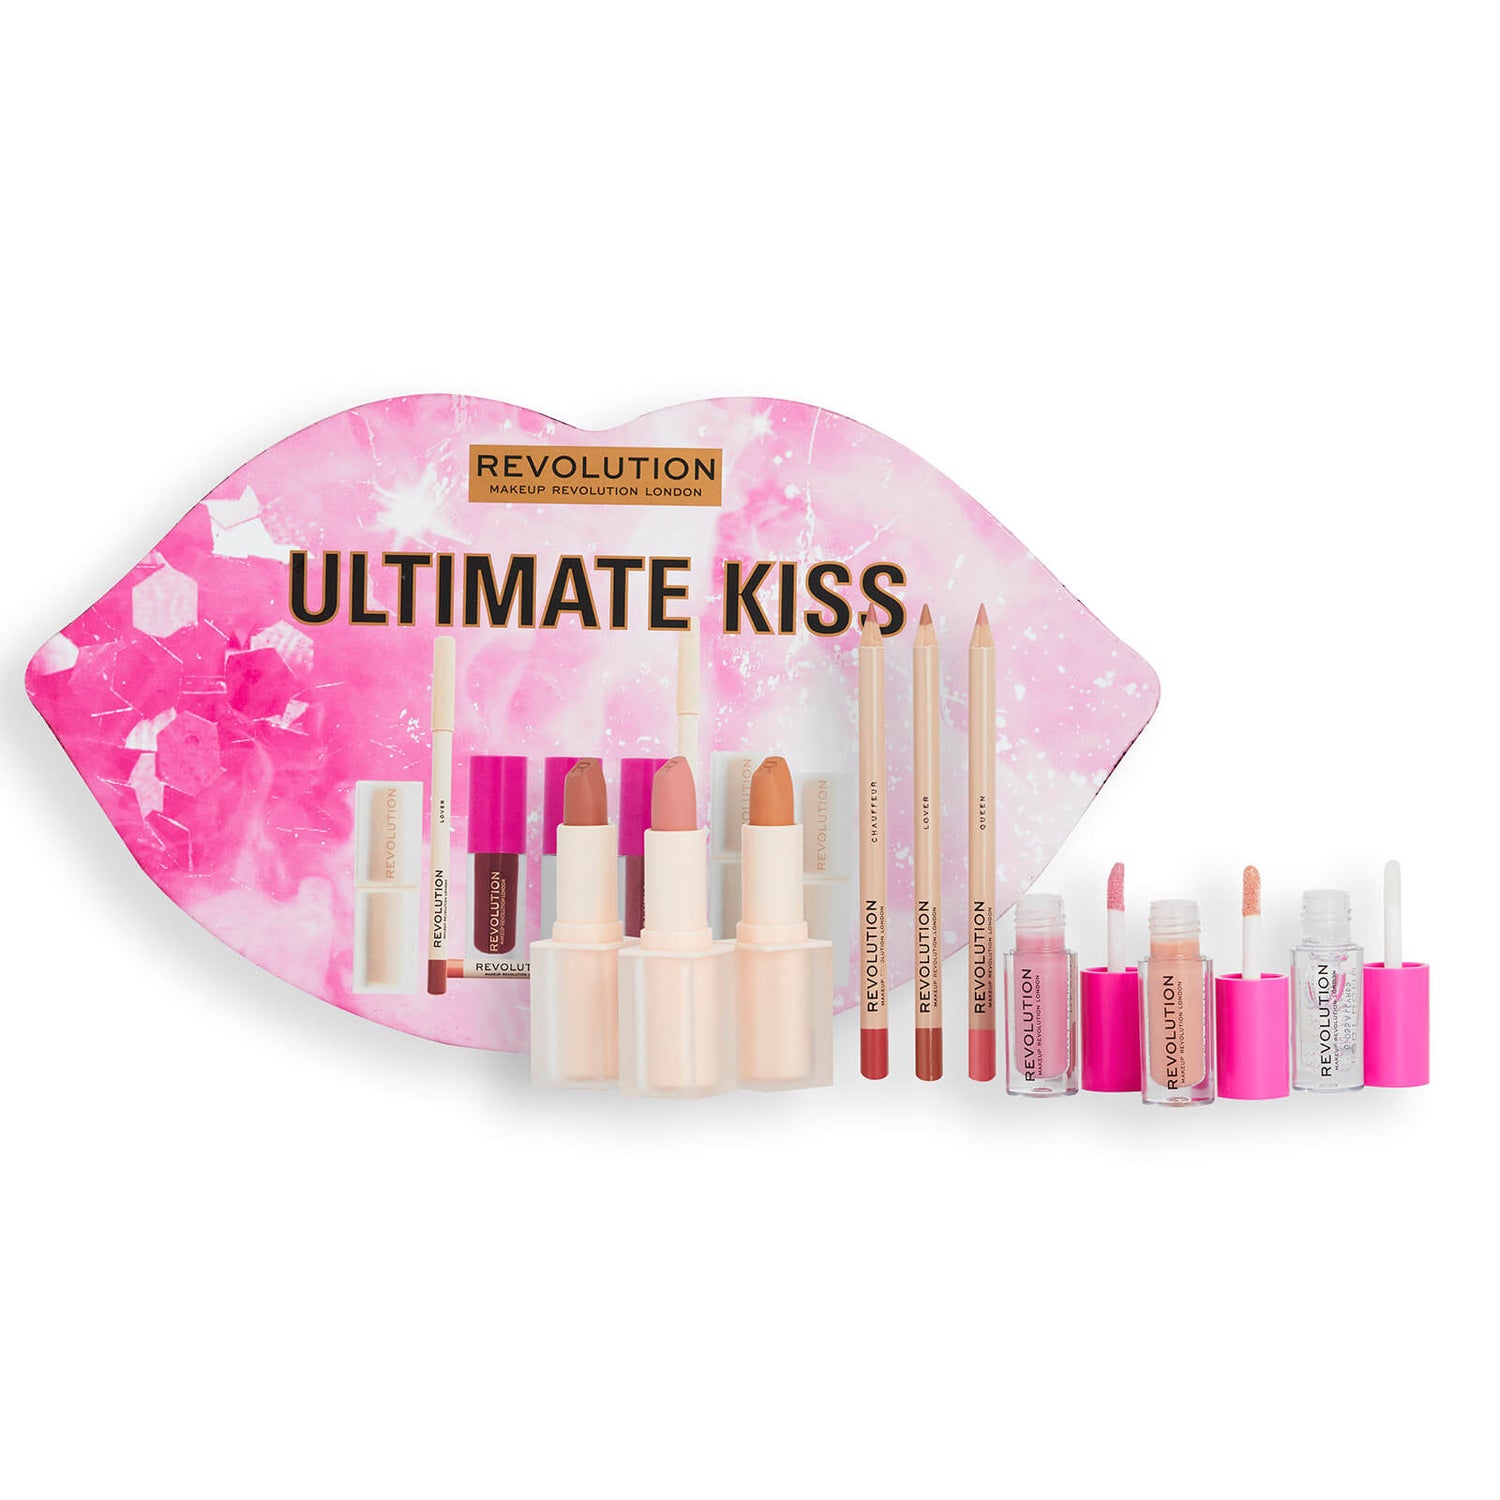 Revolution Ultimate Kiss Gift Set (Worth $72.00)